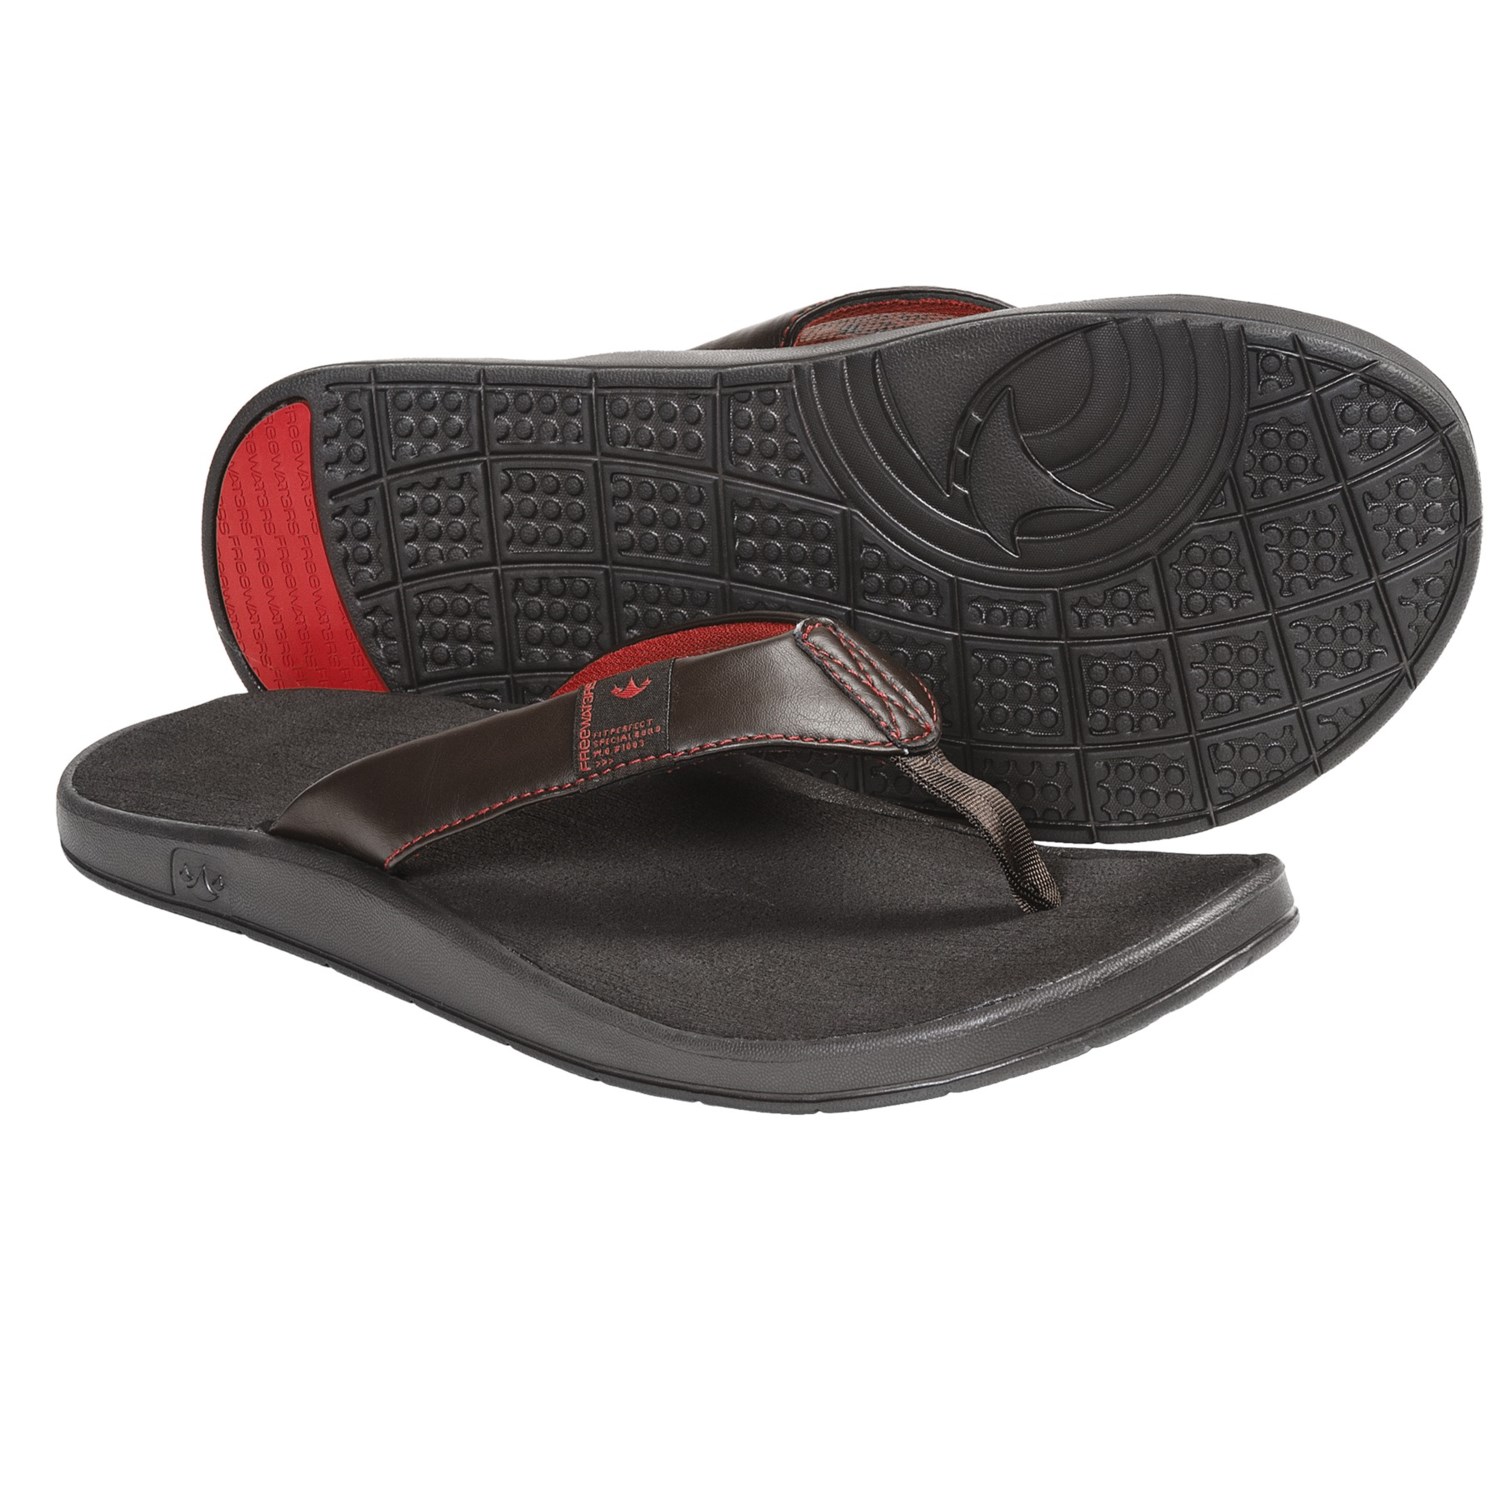 Freewaters Cruz Control Sandals - Flip-Flops (For Men) in BrownRed